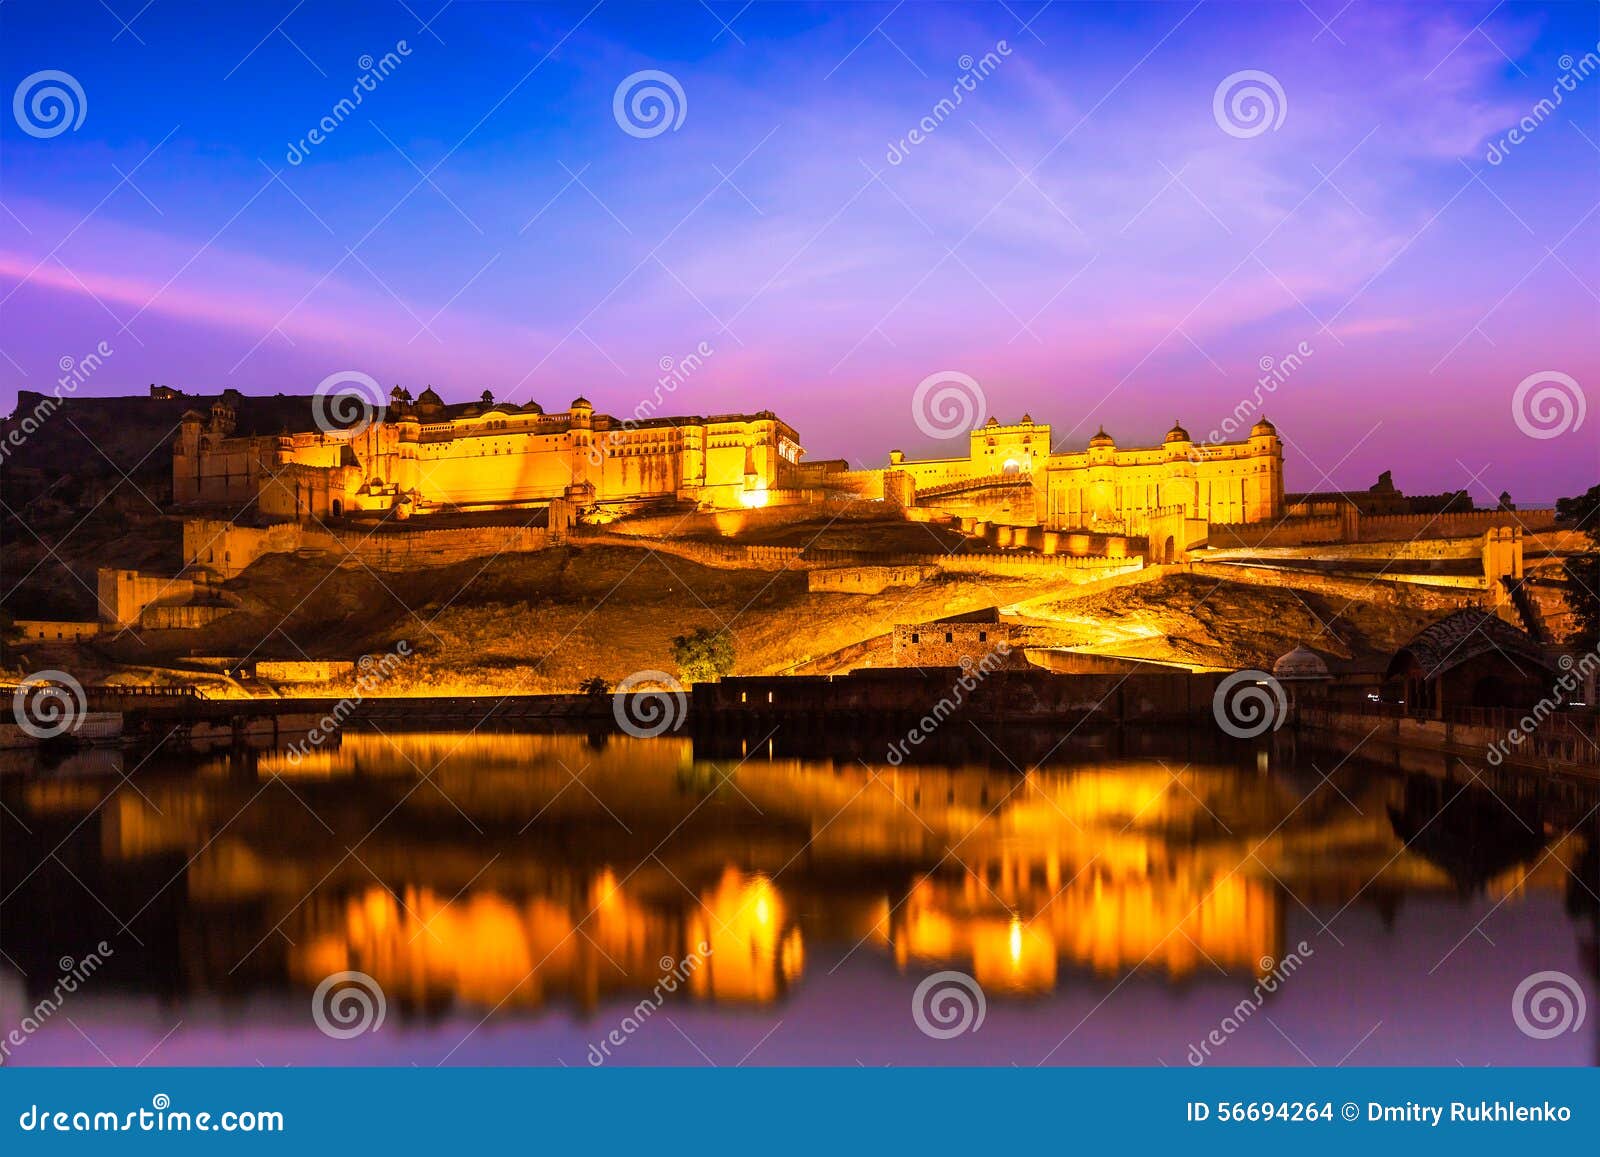 amer fort at night in twilight. jaipur, rajastan